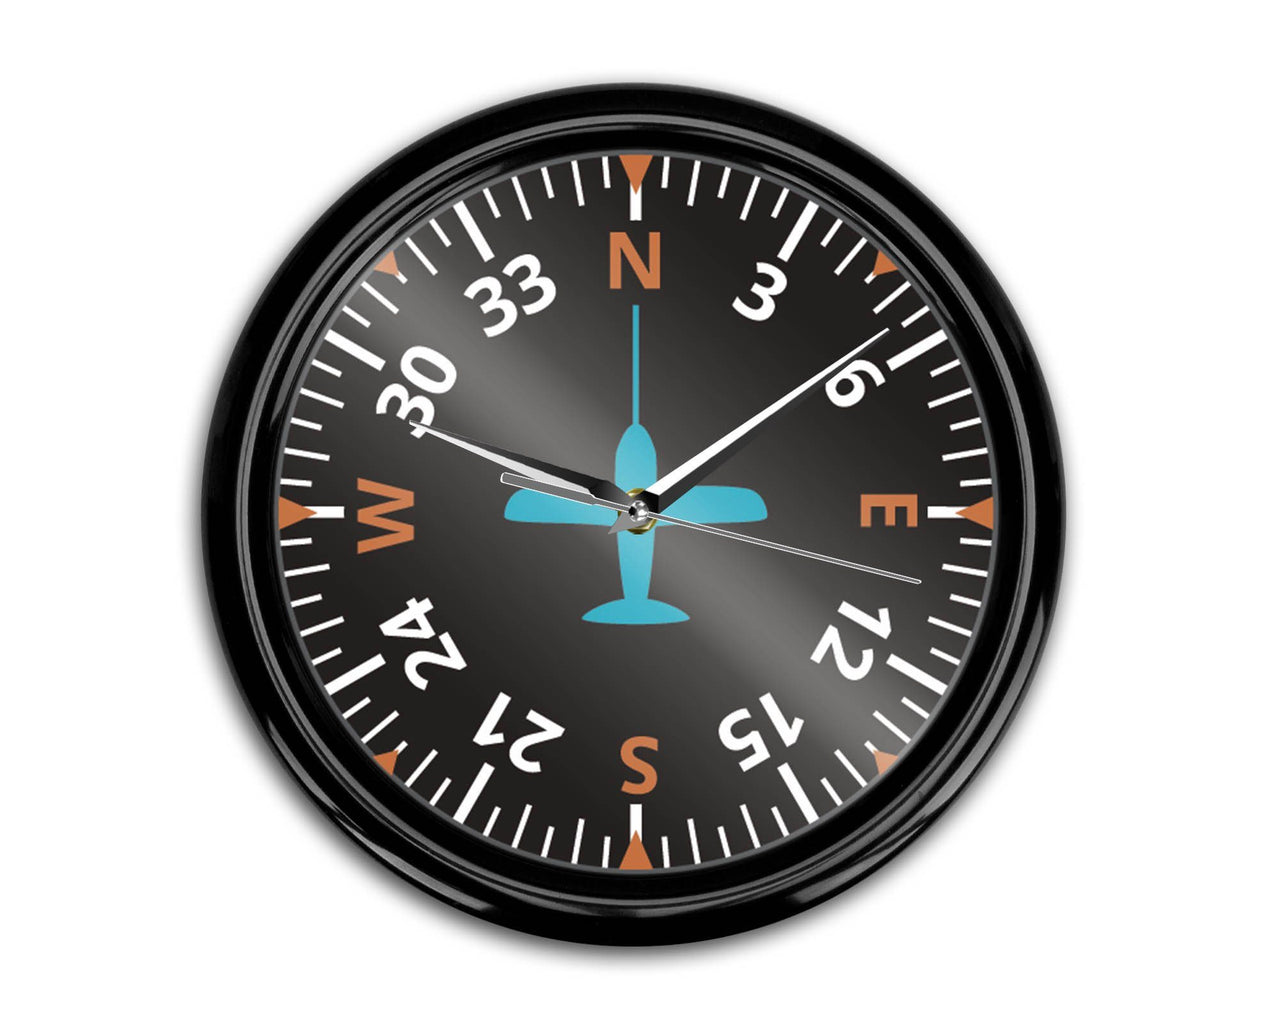 Airplane Instruments (Heading2) Designed Wall Clocks Aviation Shop 